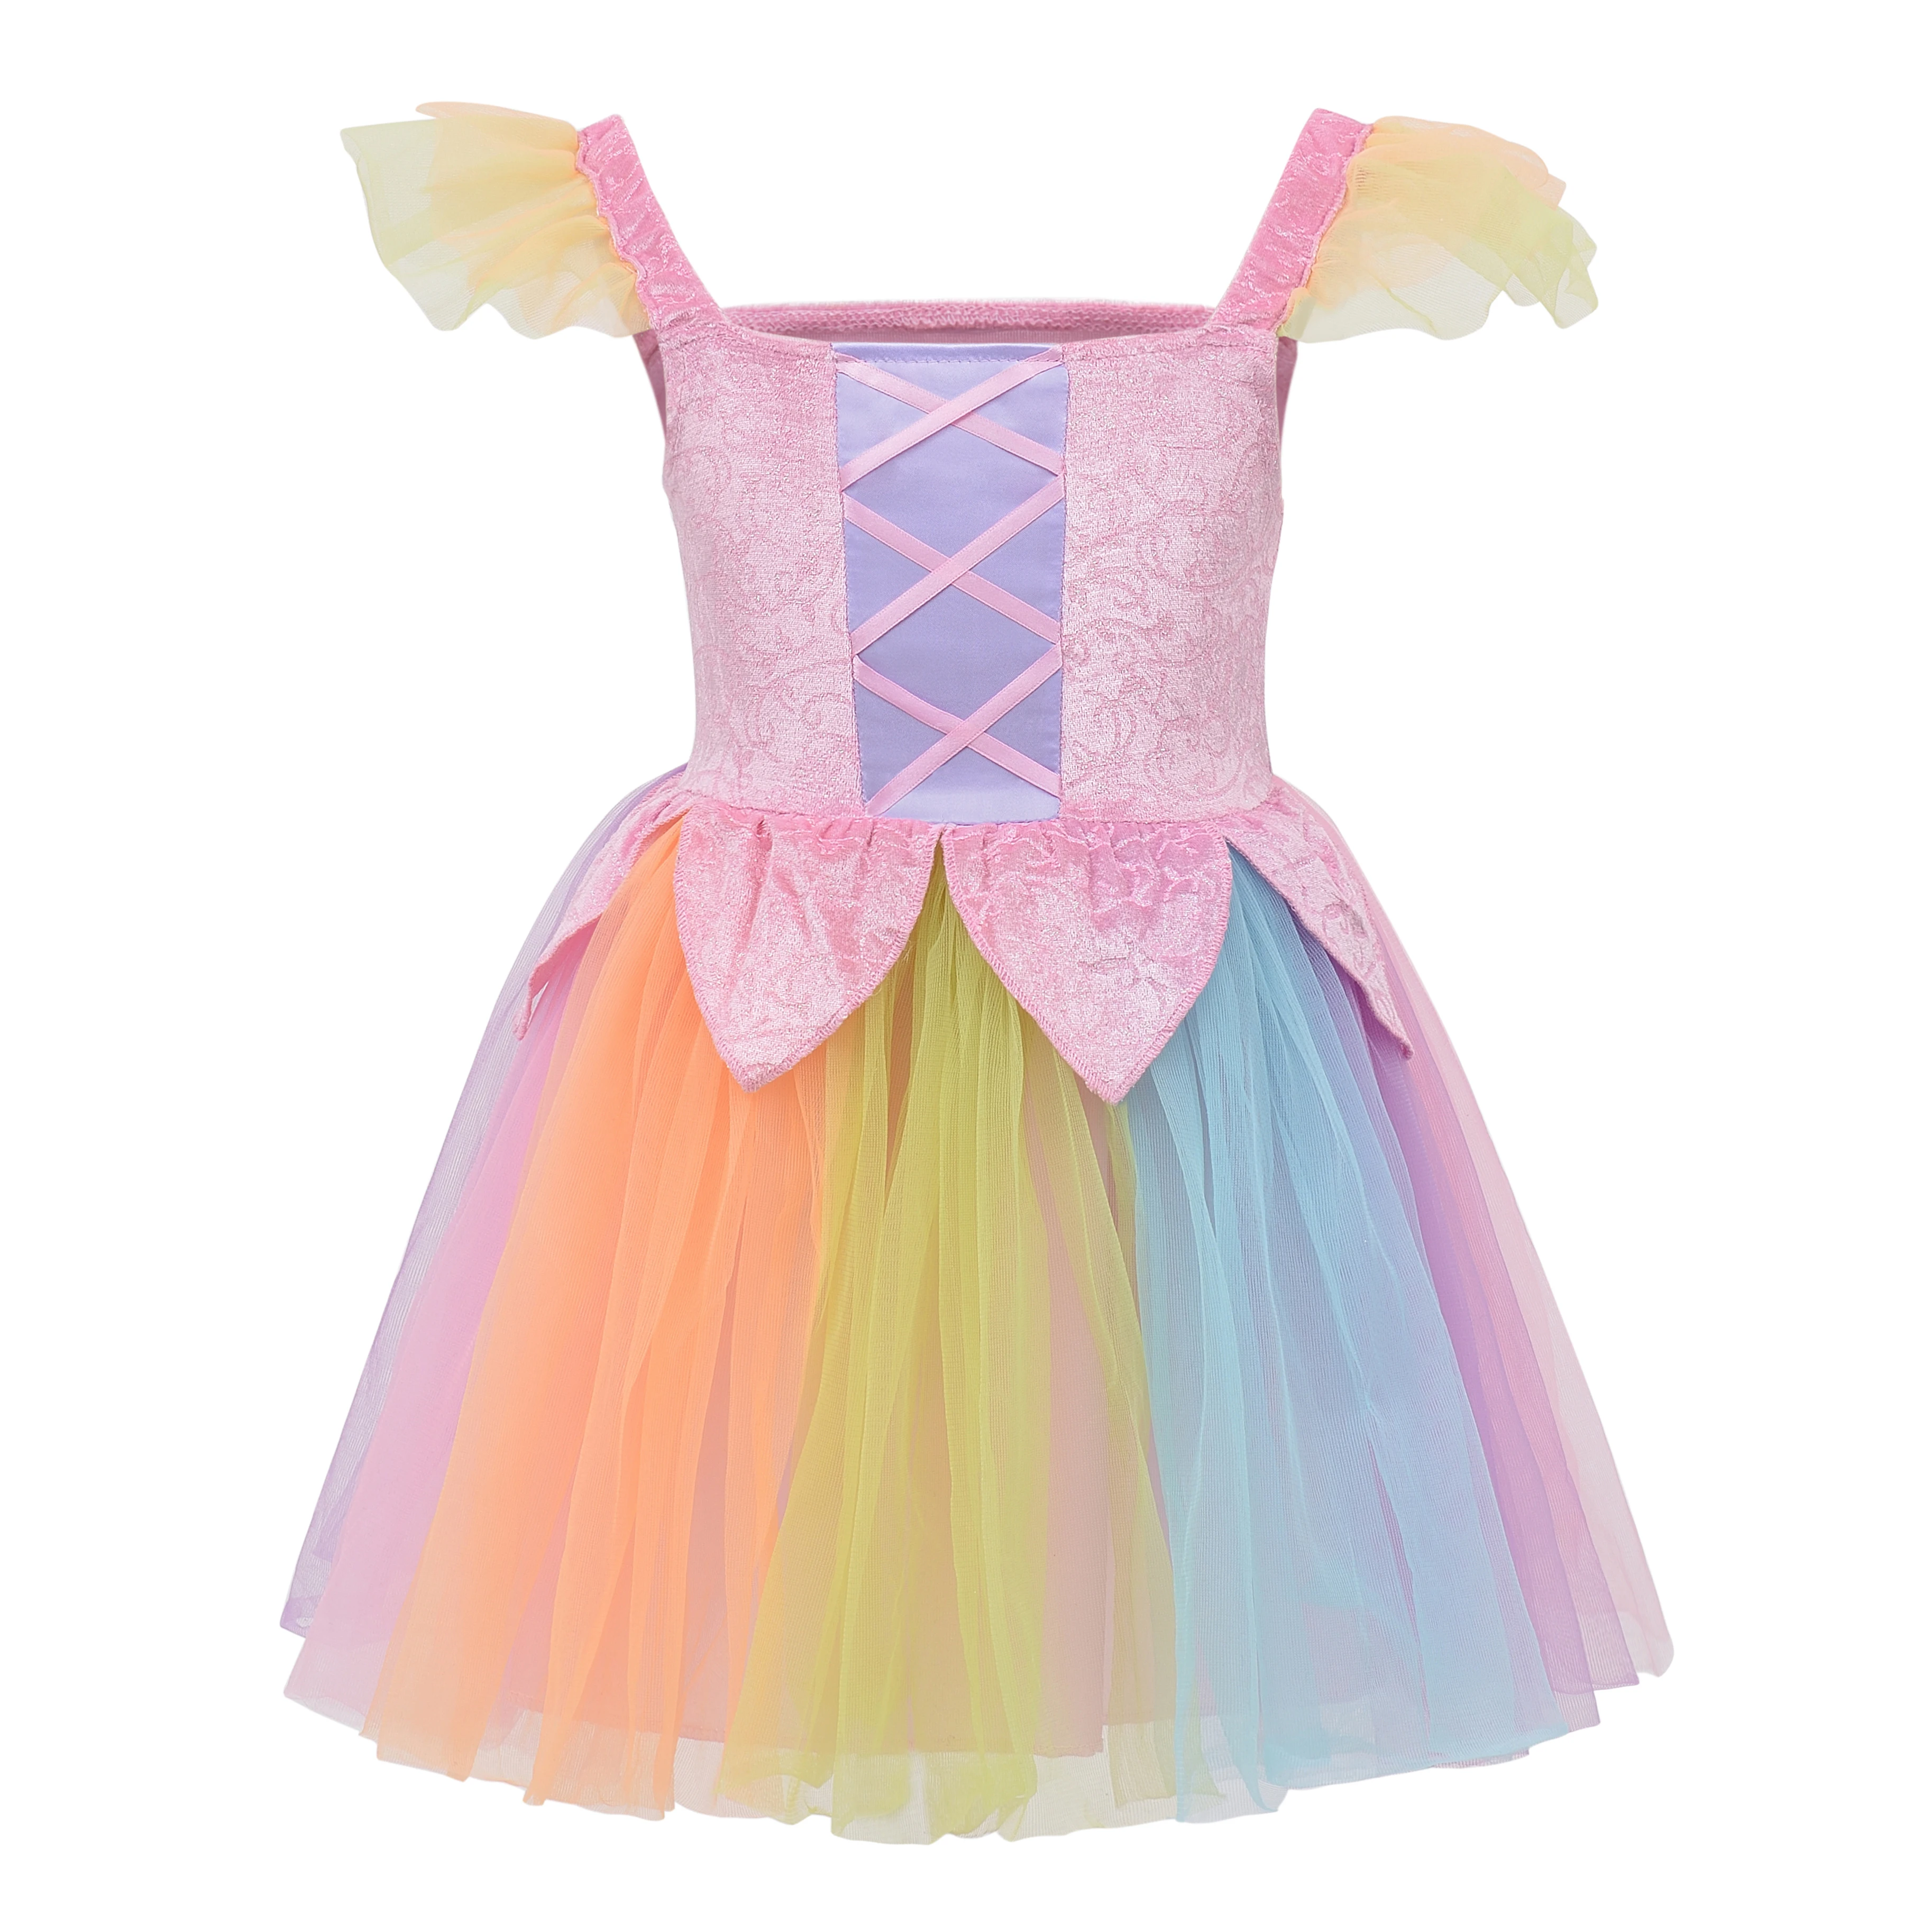 Girls Pretty Rainbow Fairy Princess Dress Costume for Pretend Play Party